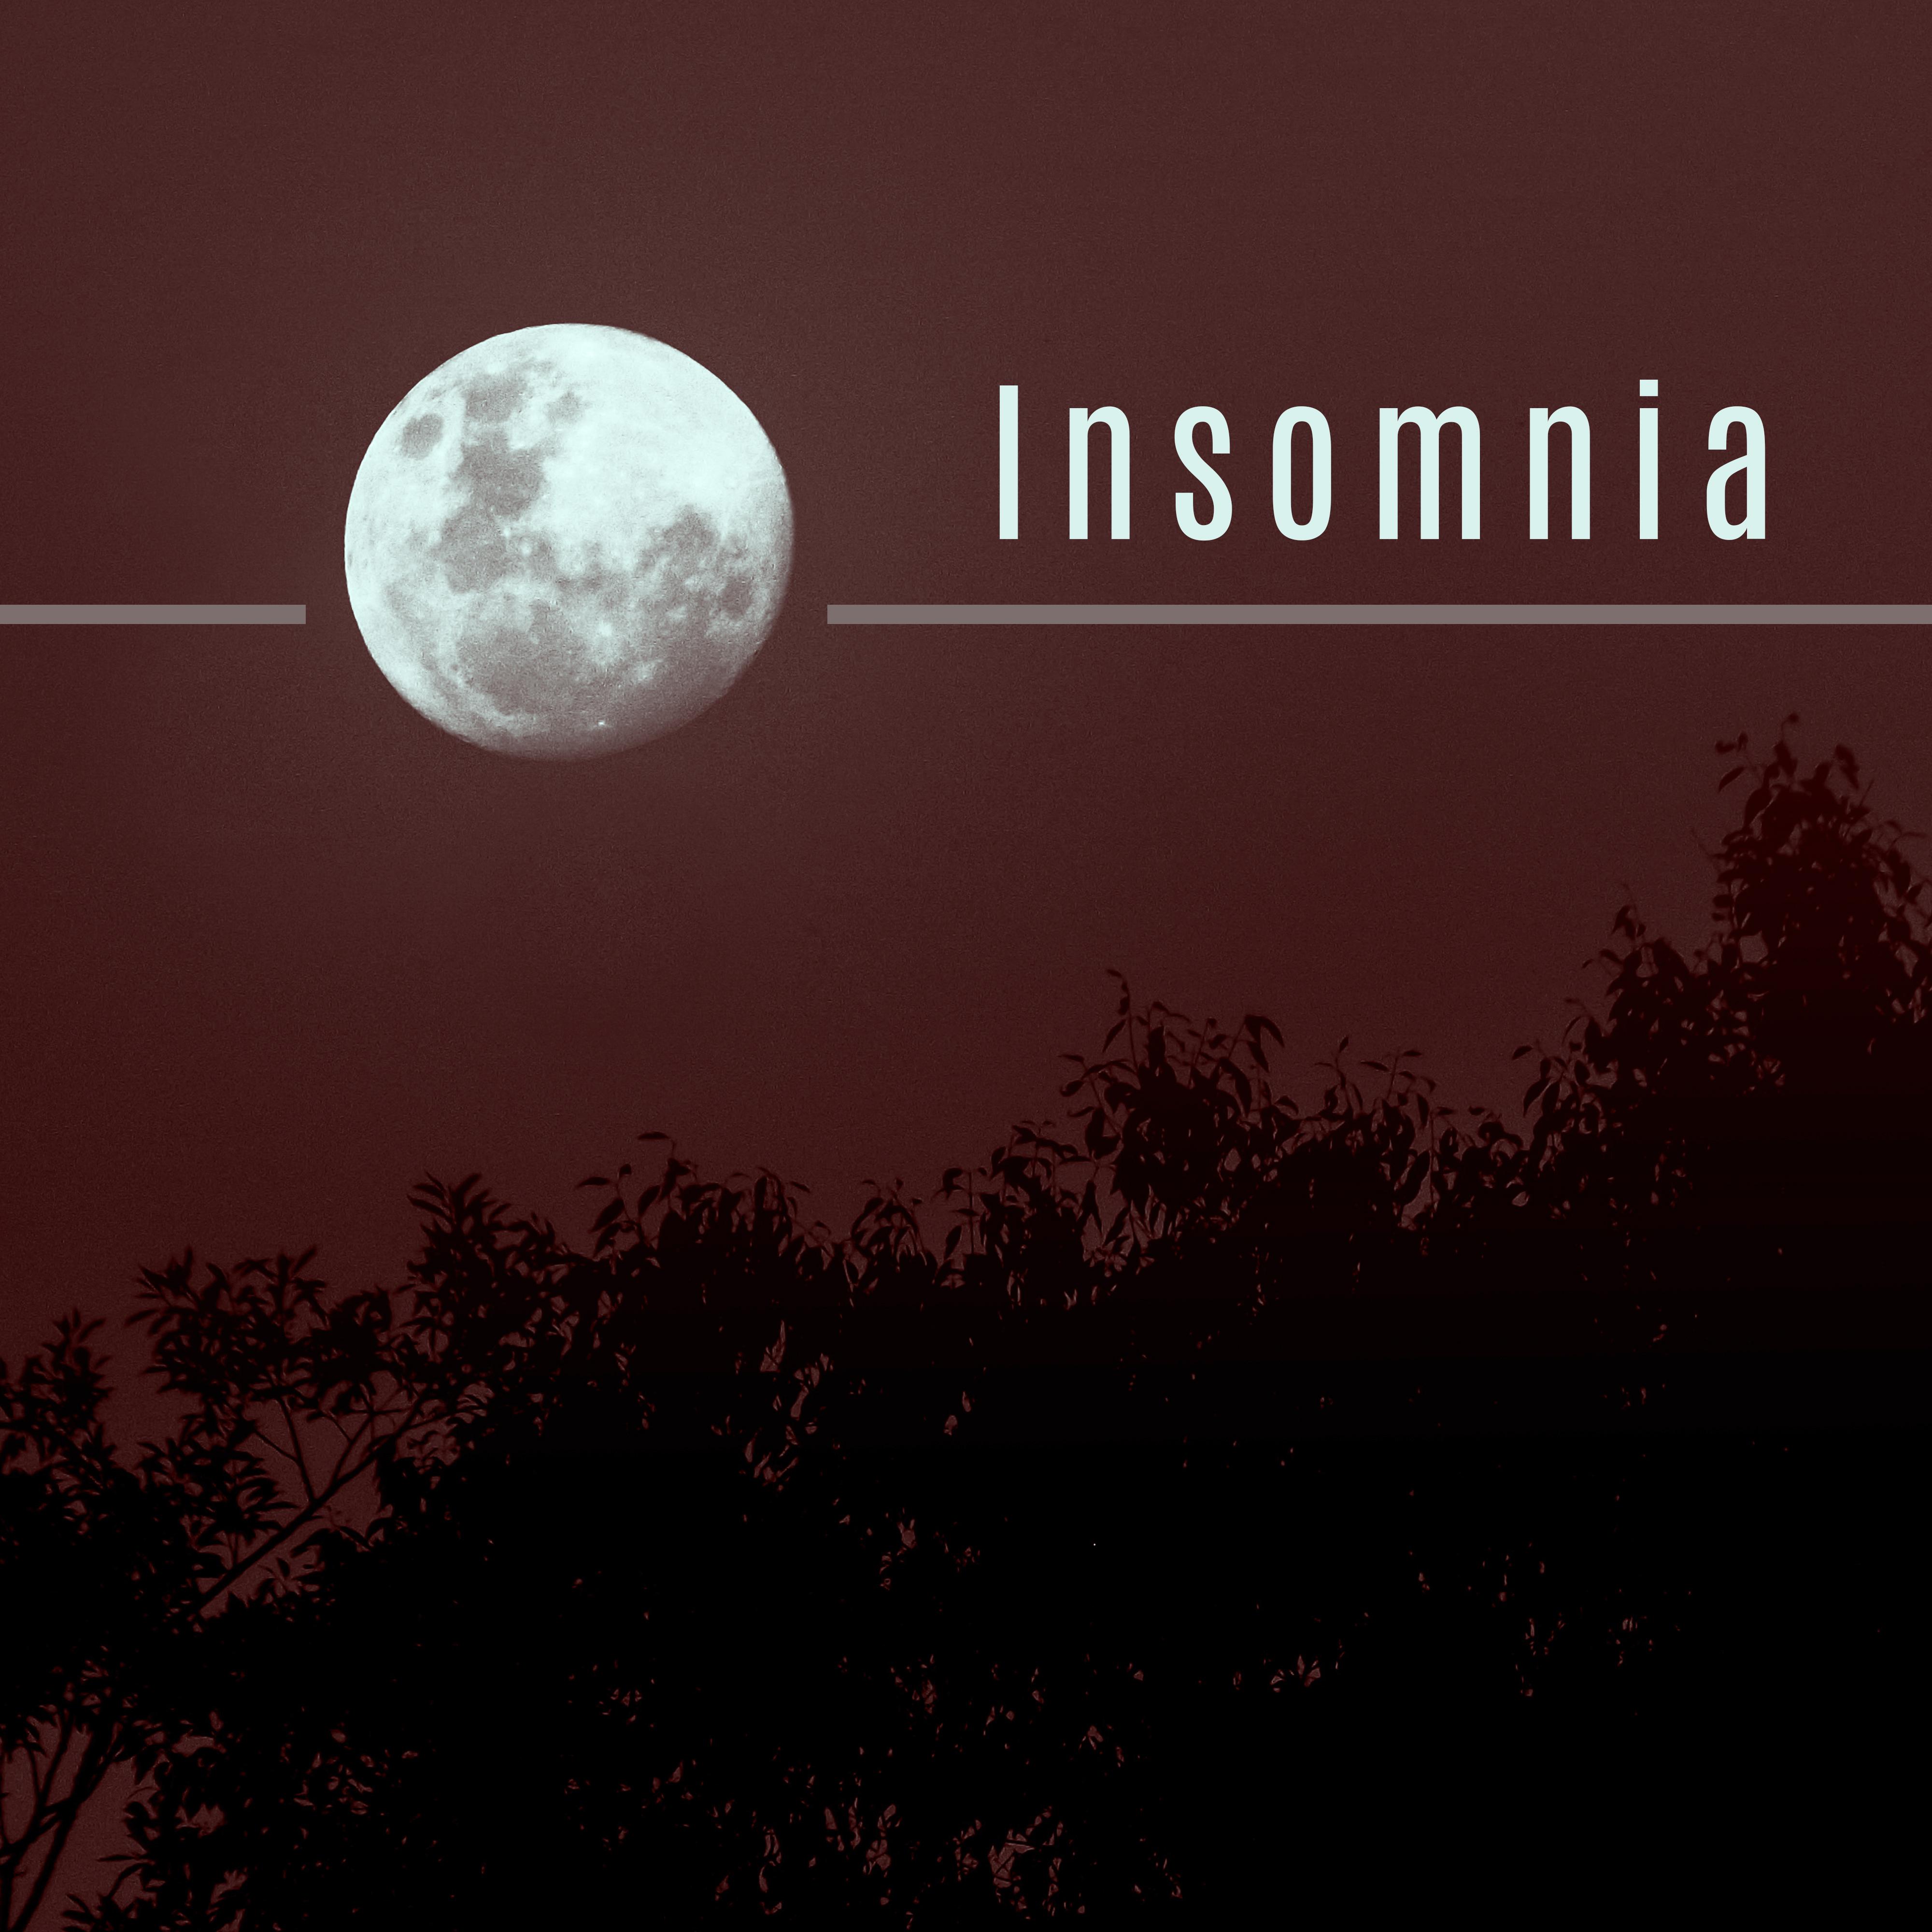 Insomnia – Music for Sleep, Calm Down Before Sleep, Relax, Restful Night, Deep Sleep, Lullabies Music